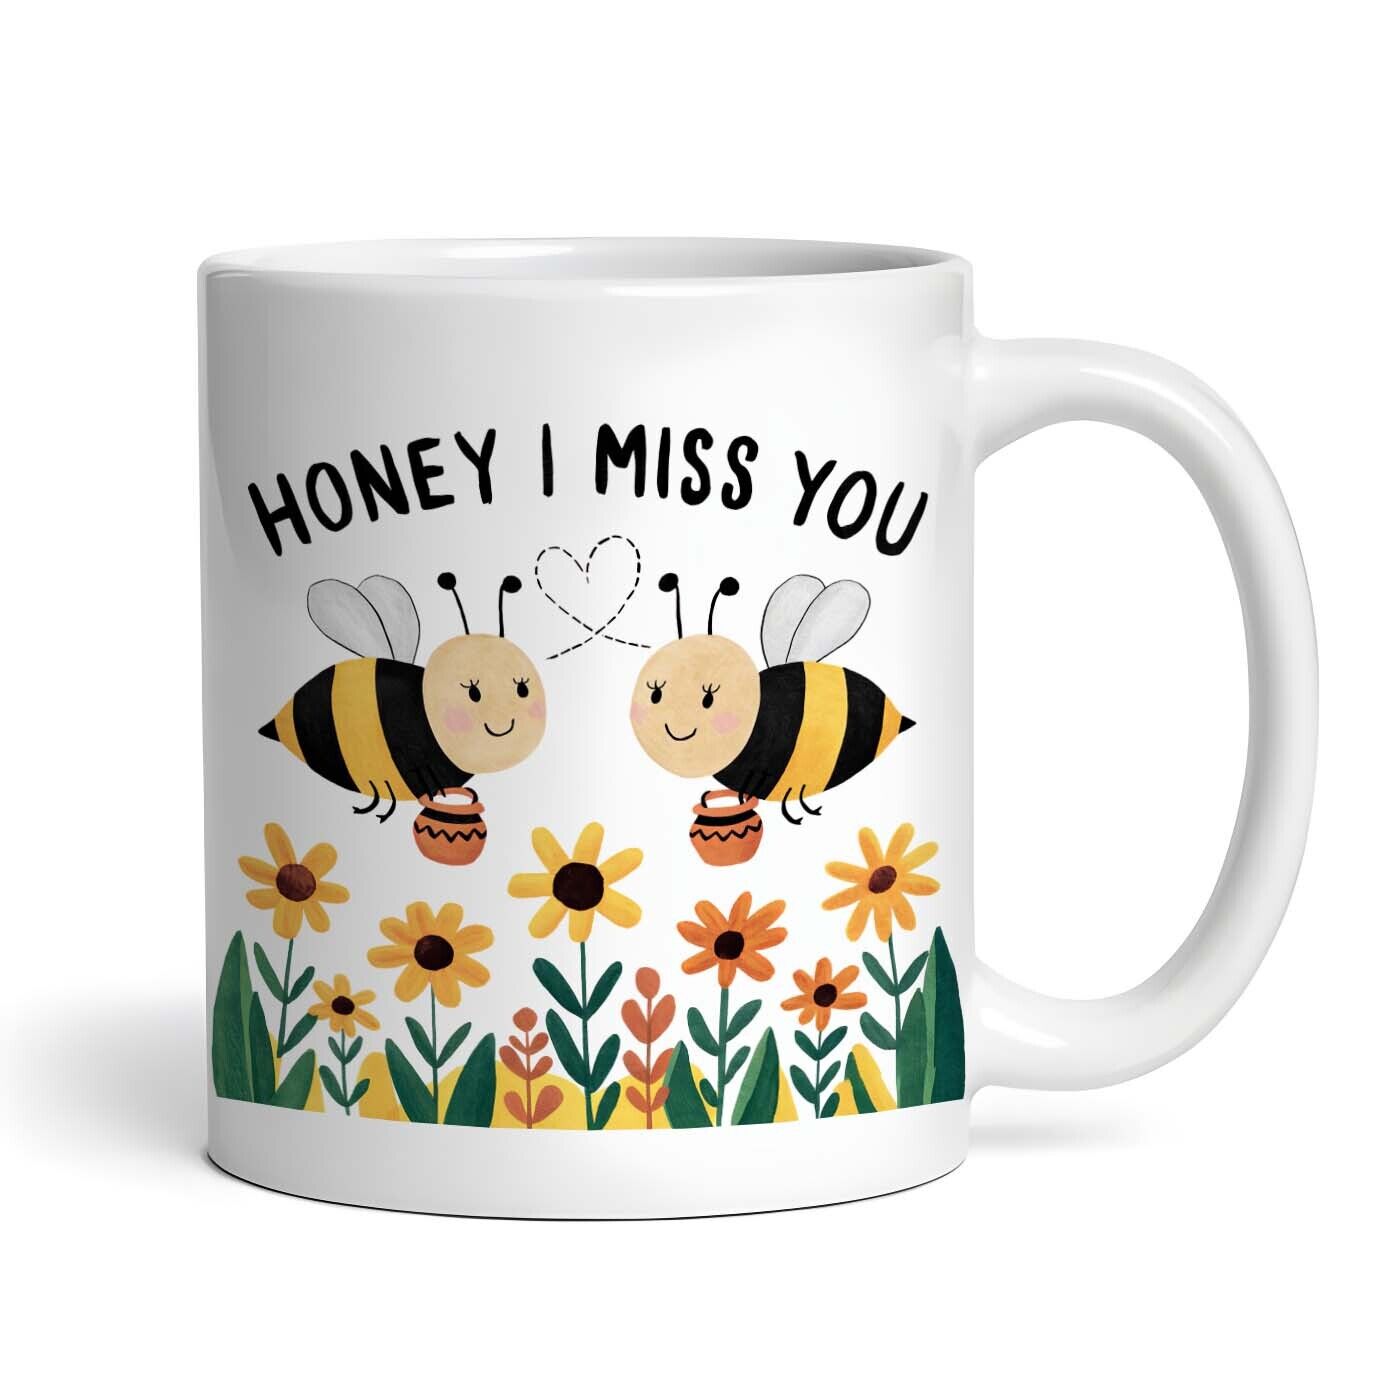 Honey I Miss You - Bee - Mug